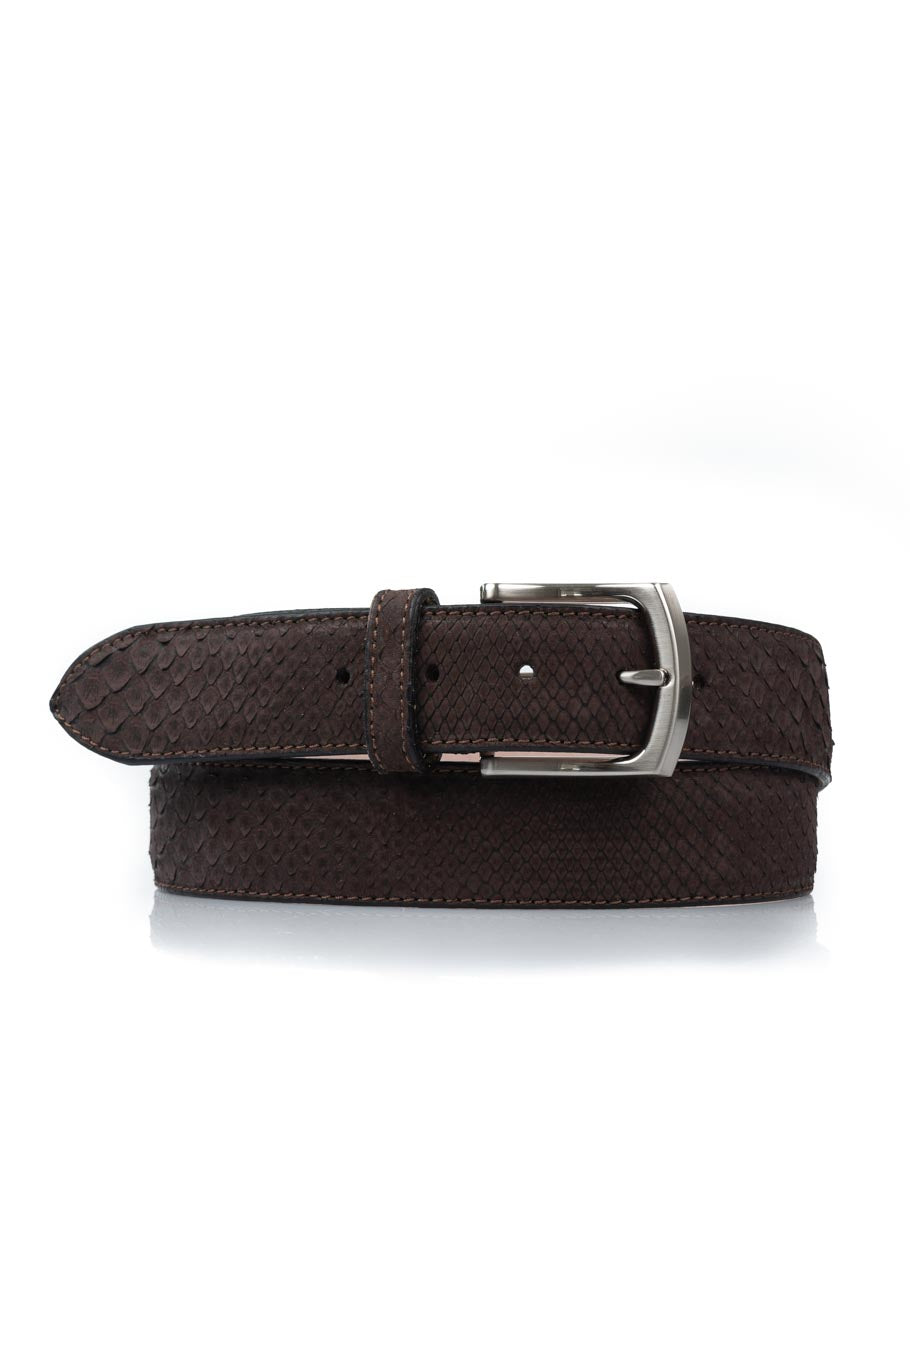 achterstalligheid arm Norm Riccamente Milano - Python Leather